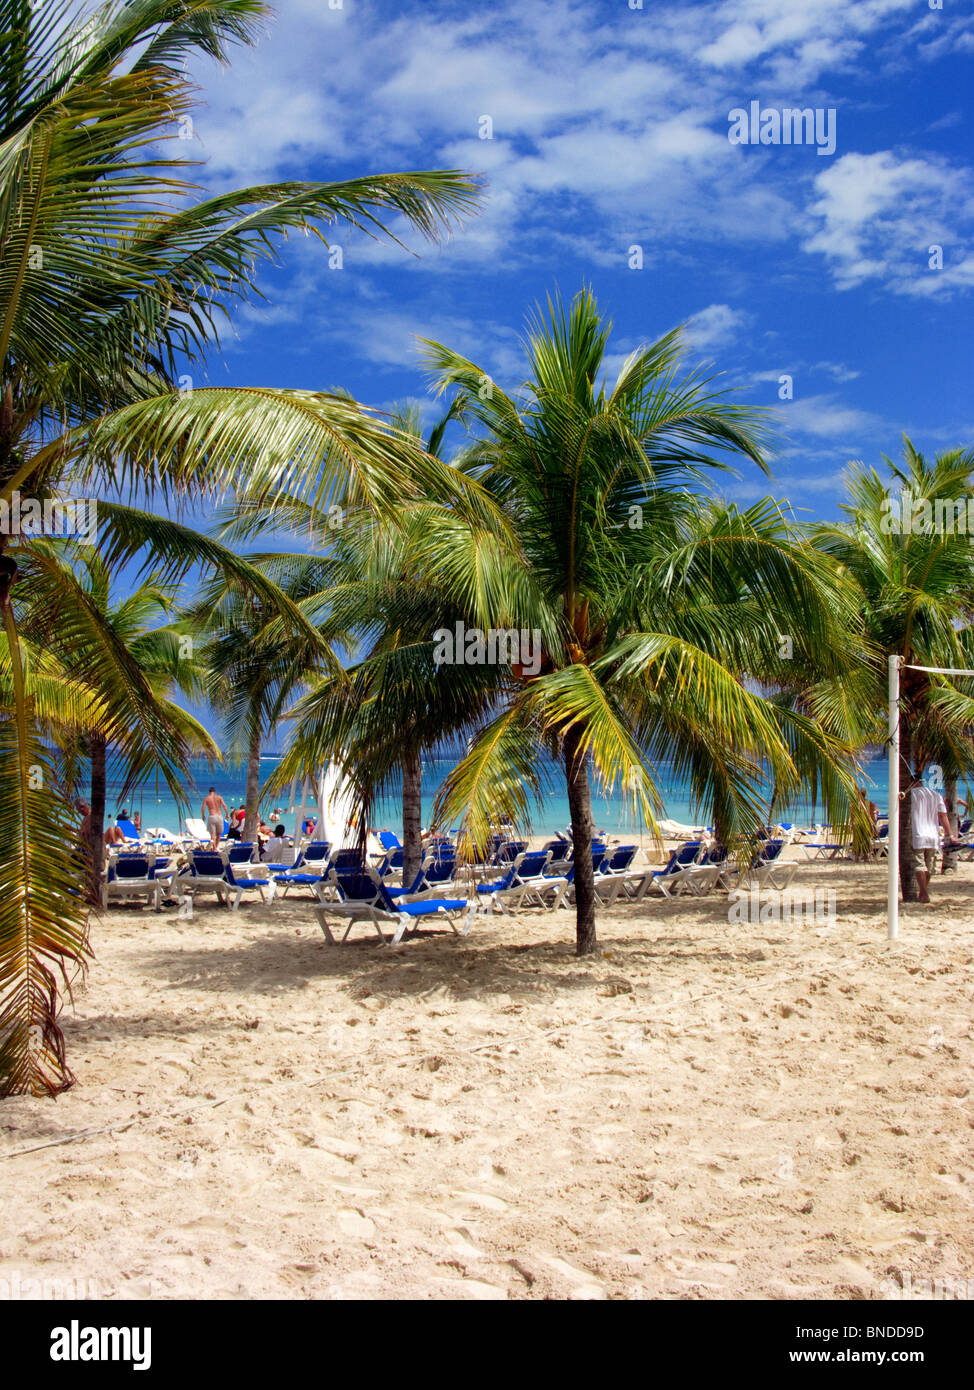 Palm Trees On The Mammee Bay Beach At The RIU Hotel In Ocho Rios Jamaica Stock Photo